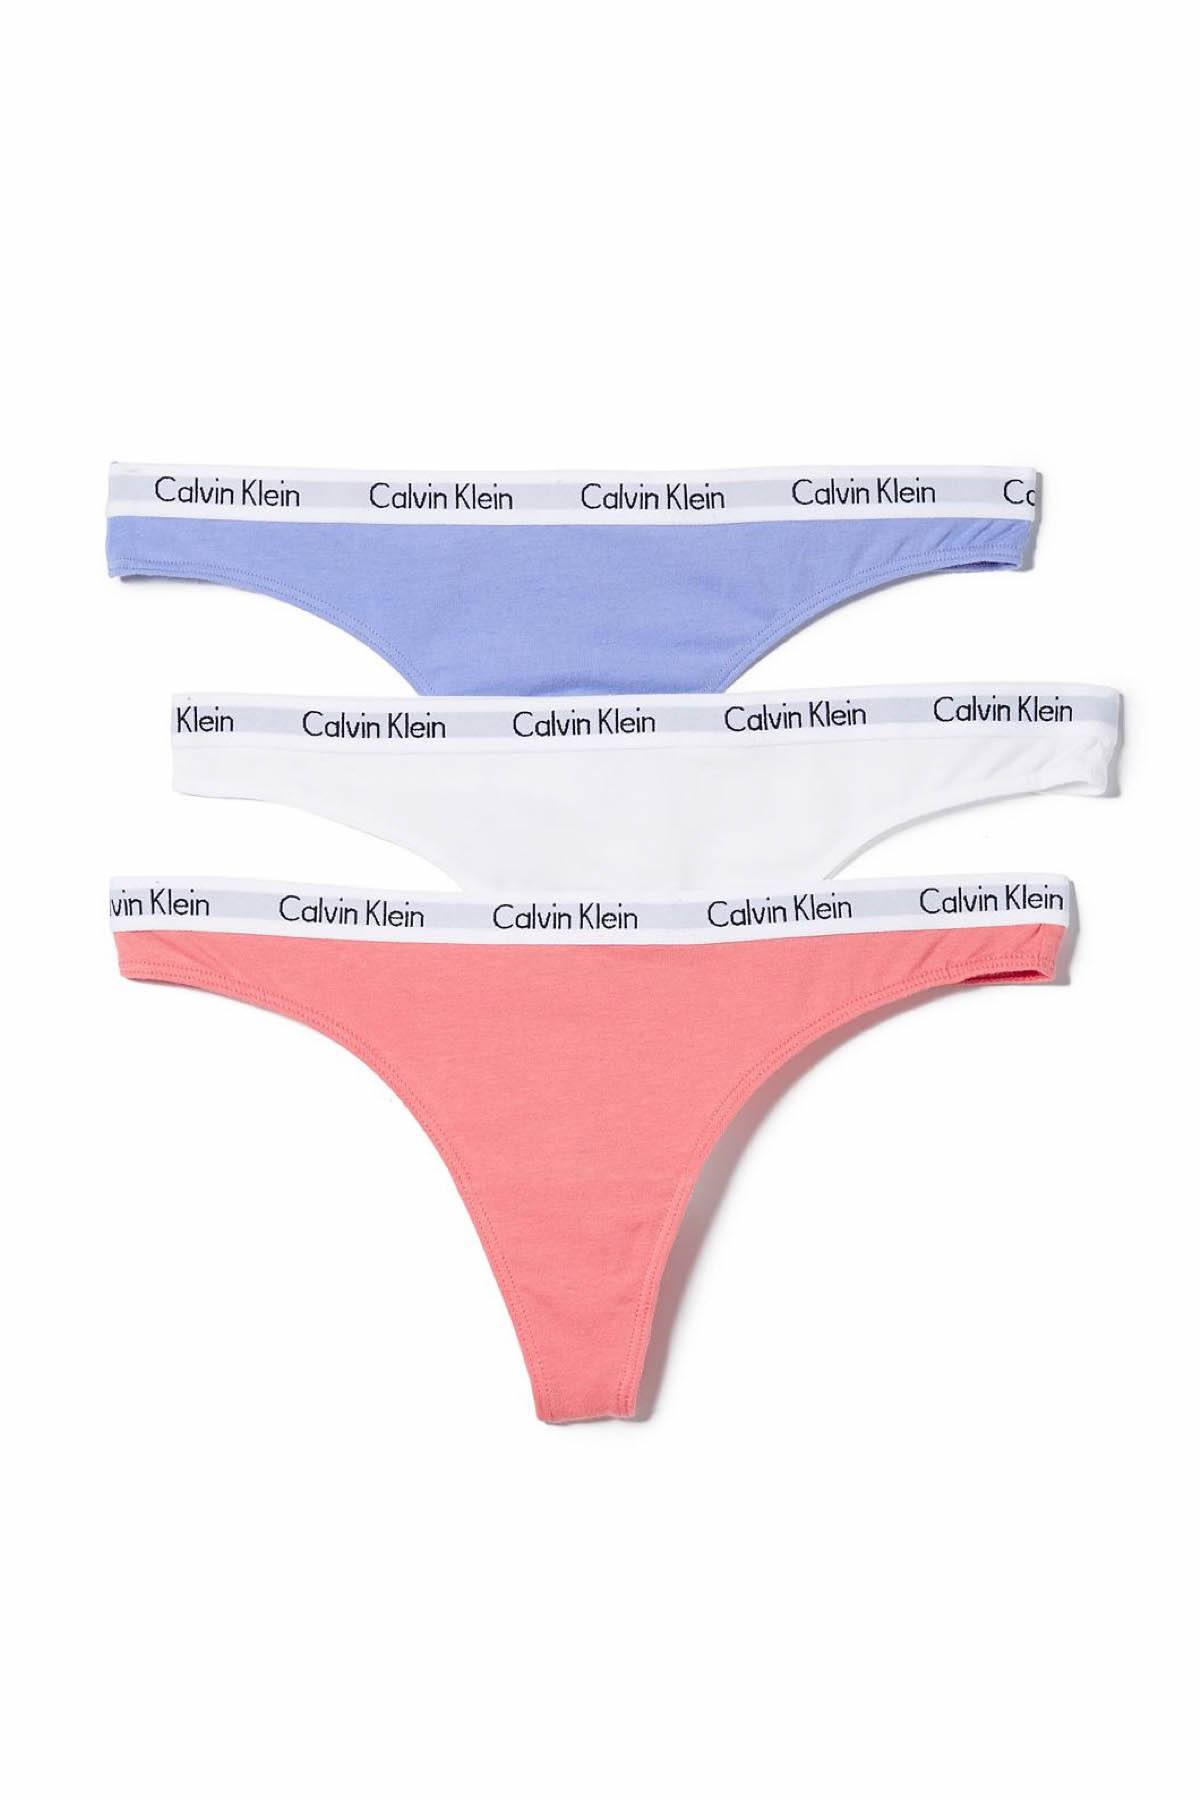 Calvin Klein Ephemeral White Sensation Carousel Thong 3 Pack Cheapundies